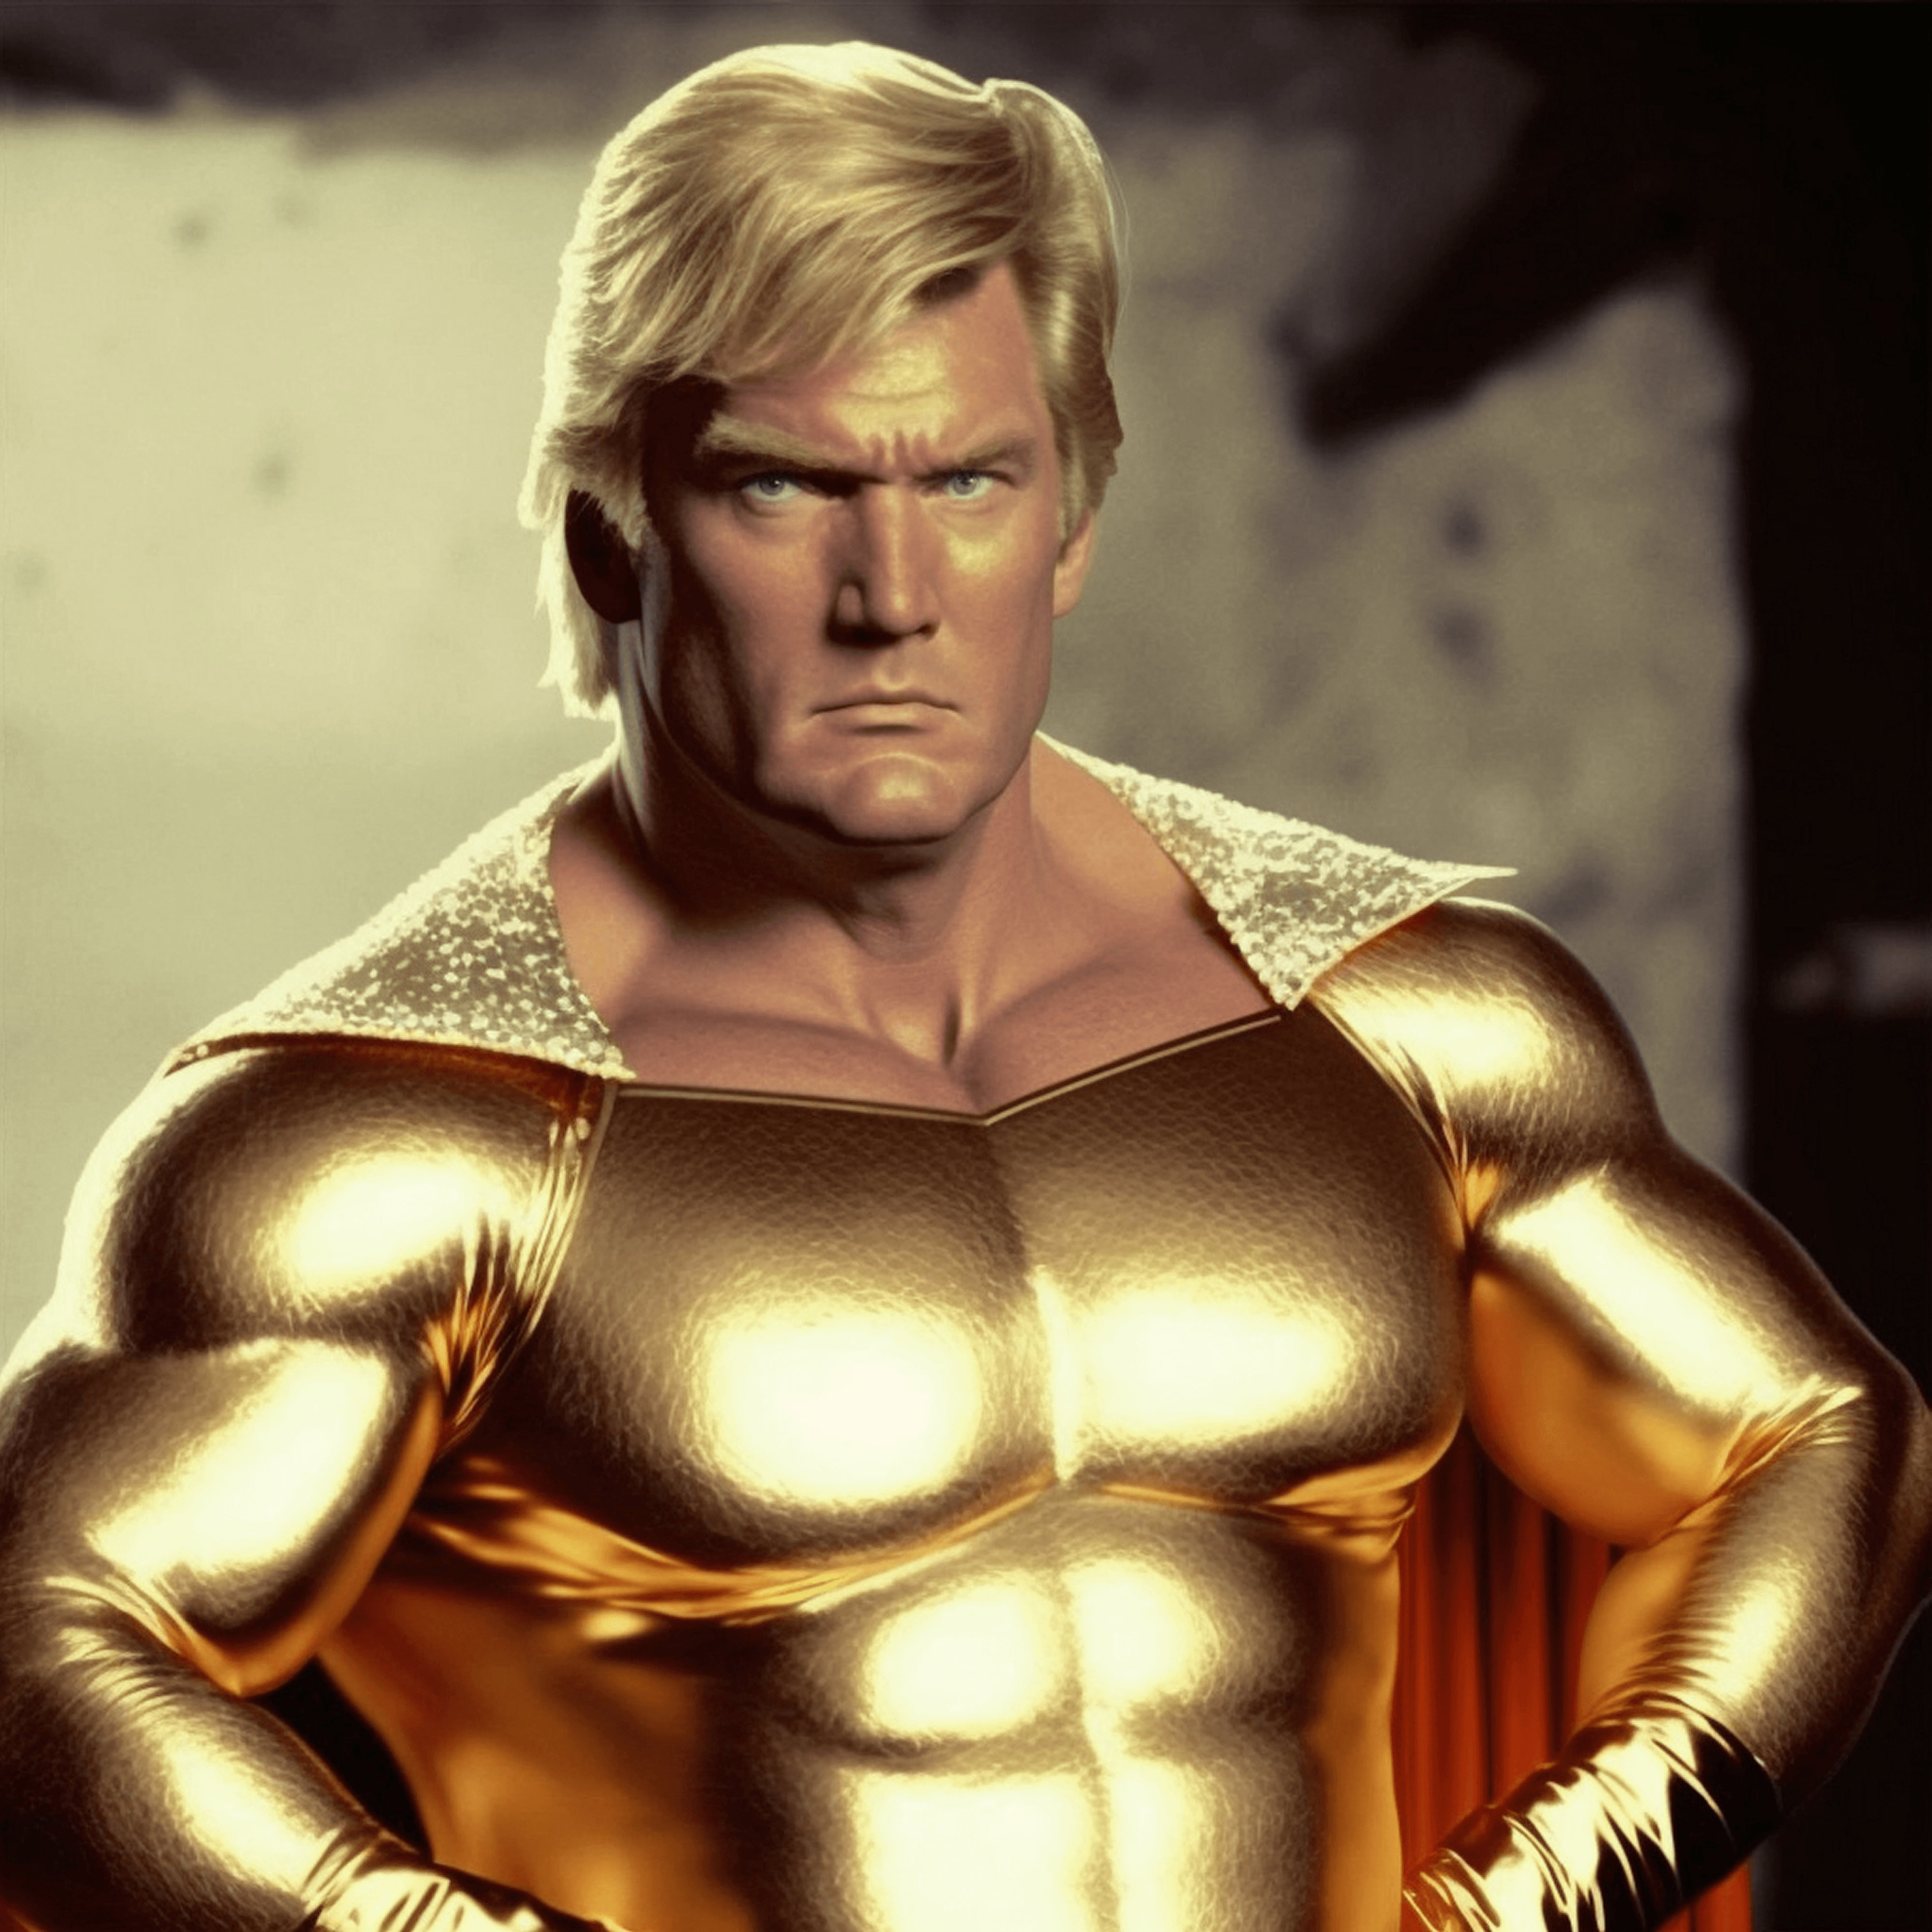 Superhero Gold No. 8 by Sollog